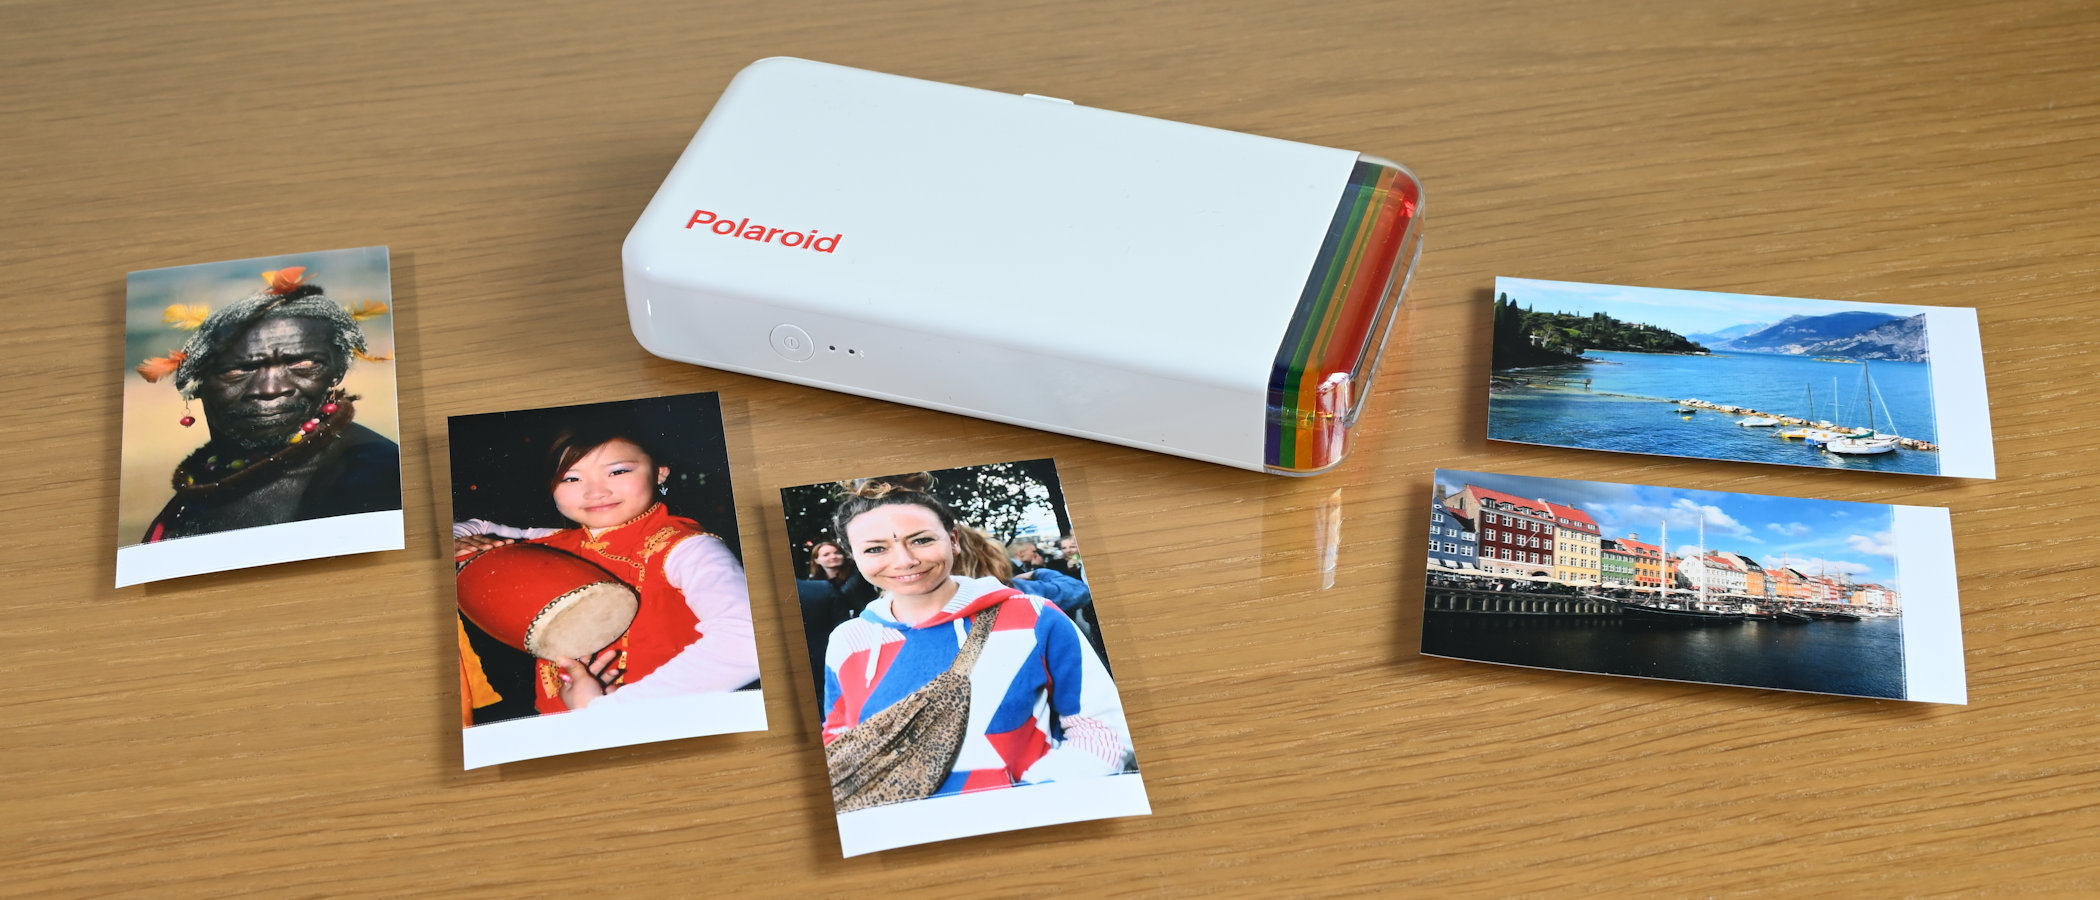 Polaroid Originals Hi-Print 2x3 Inch Pocket Printer with 3 Back